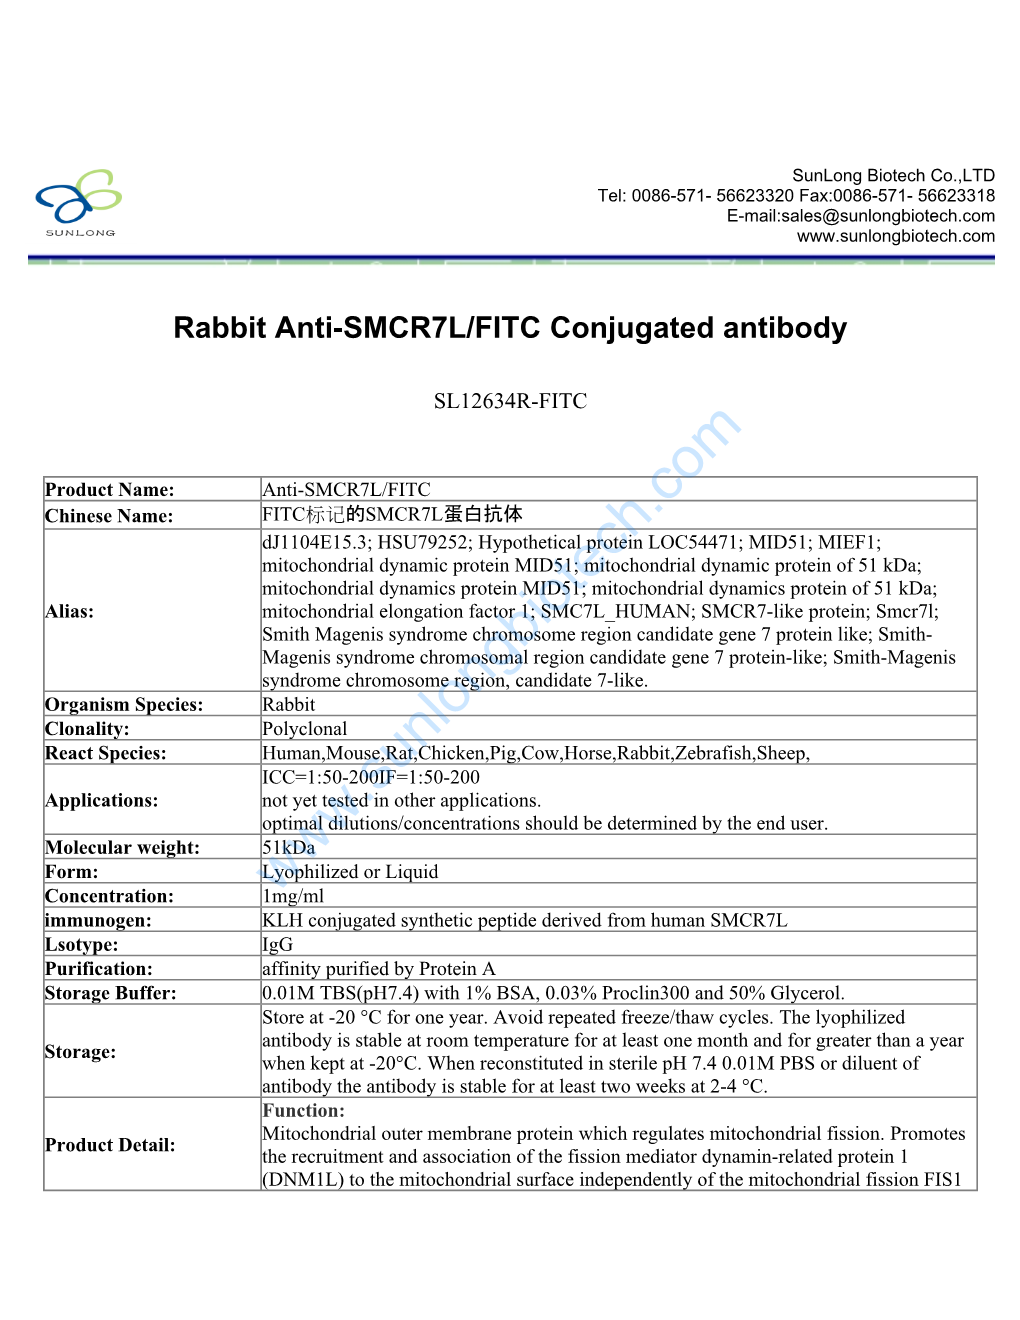 Rabbit Anti-SMCR7L/FITC Conjugated Antibody-SL12634R